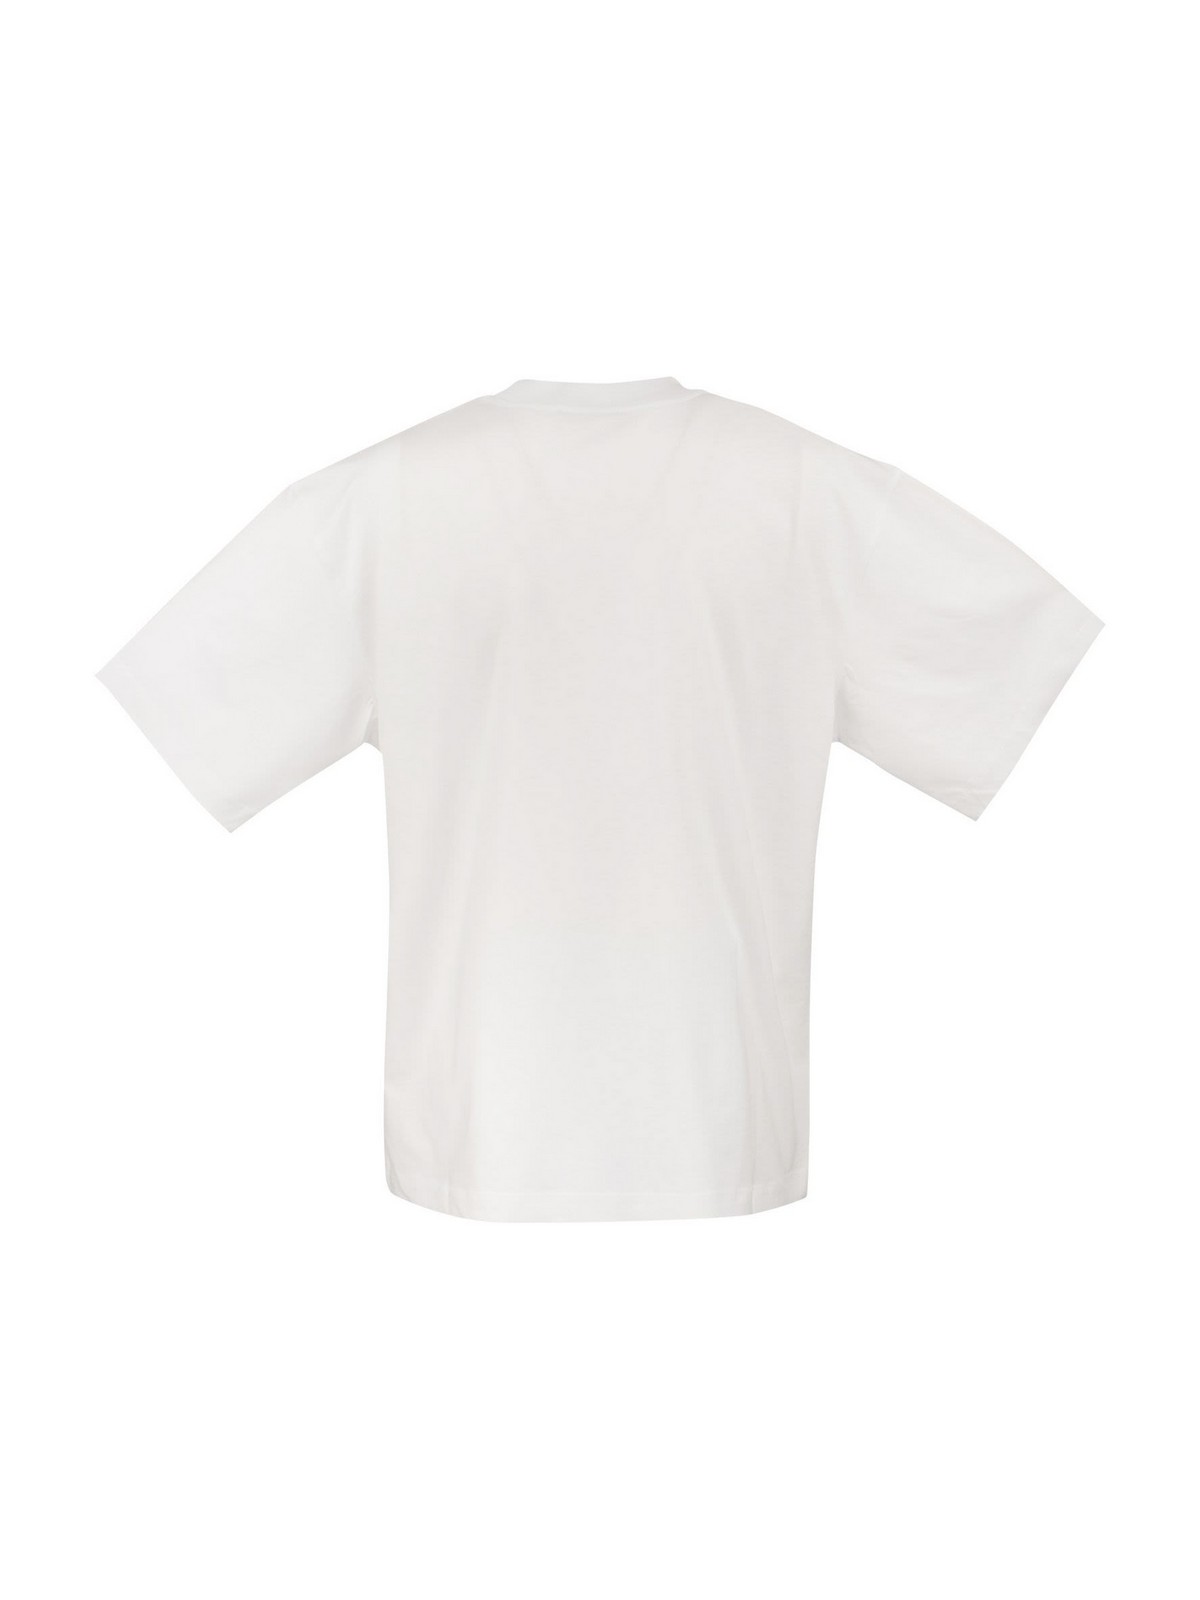 Shop Marni Camiseta - Blanco In White